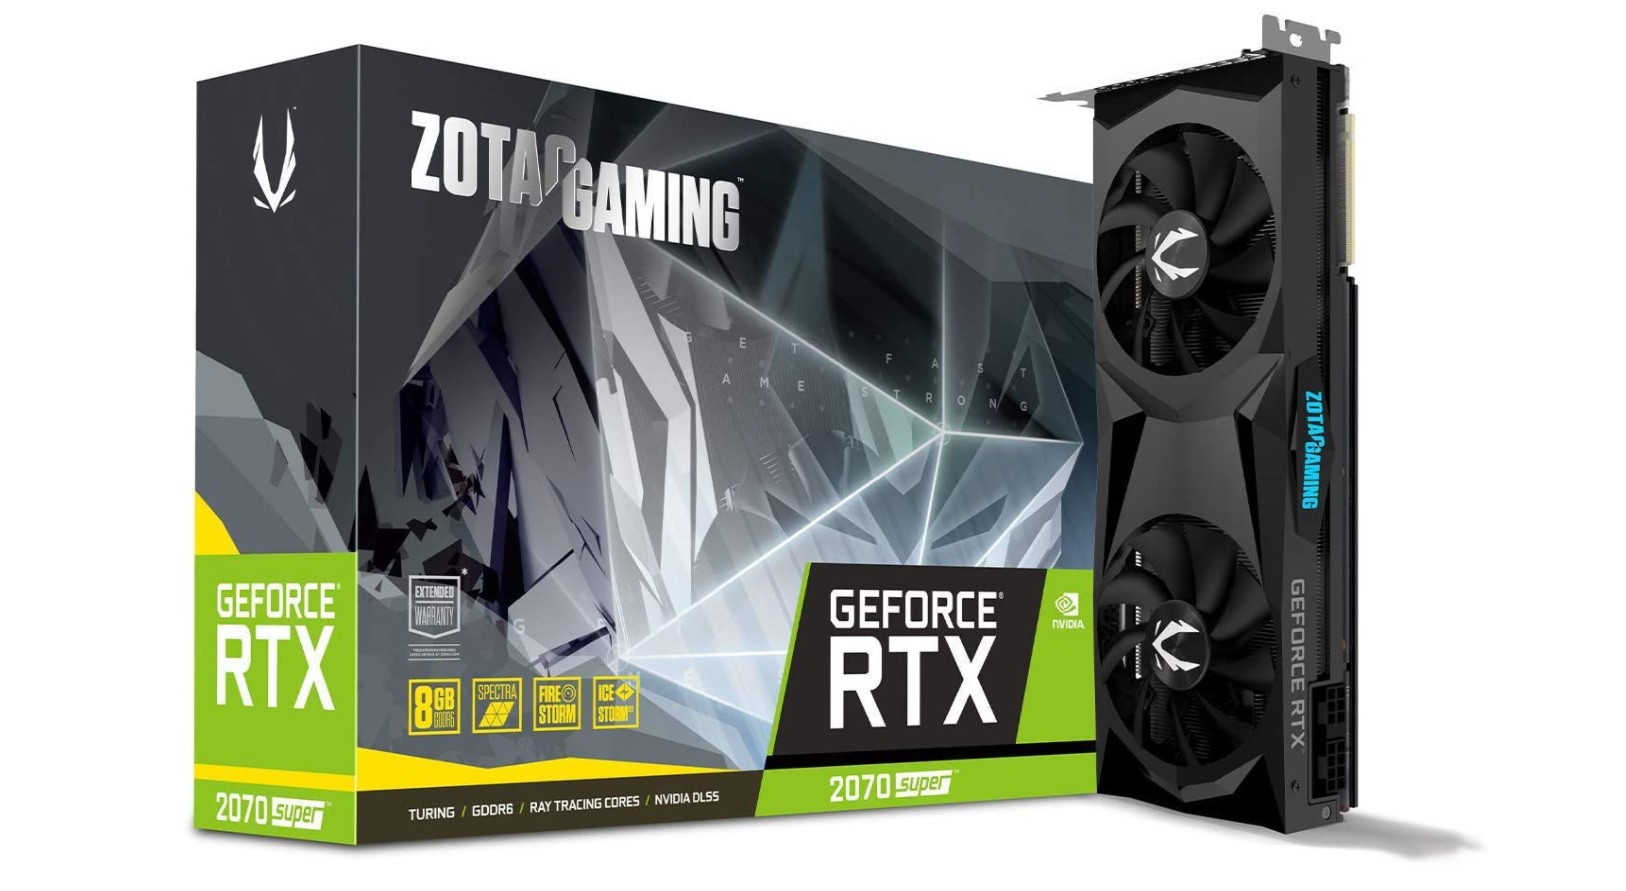 ZOTAC Gaming GeForce RTX 2070 Super Twin Fan